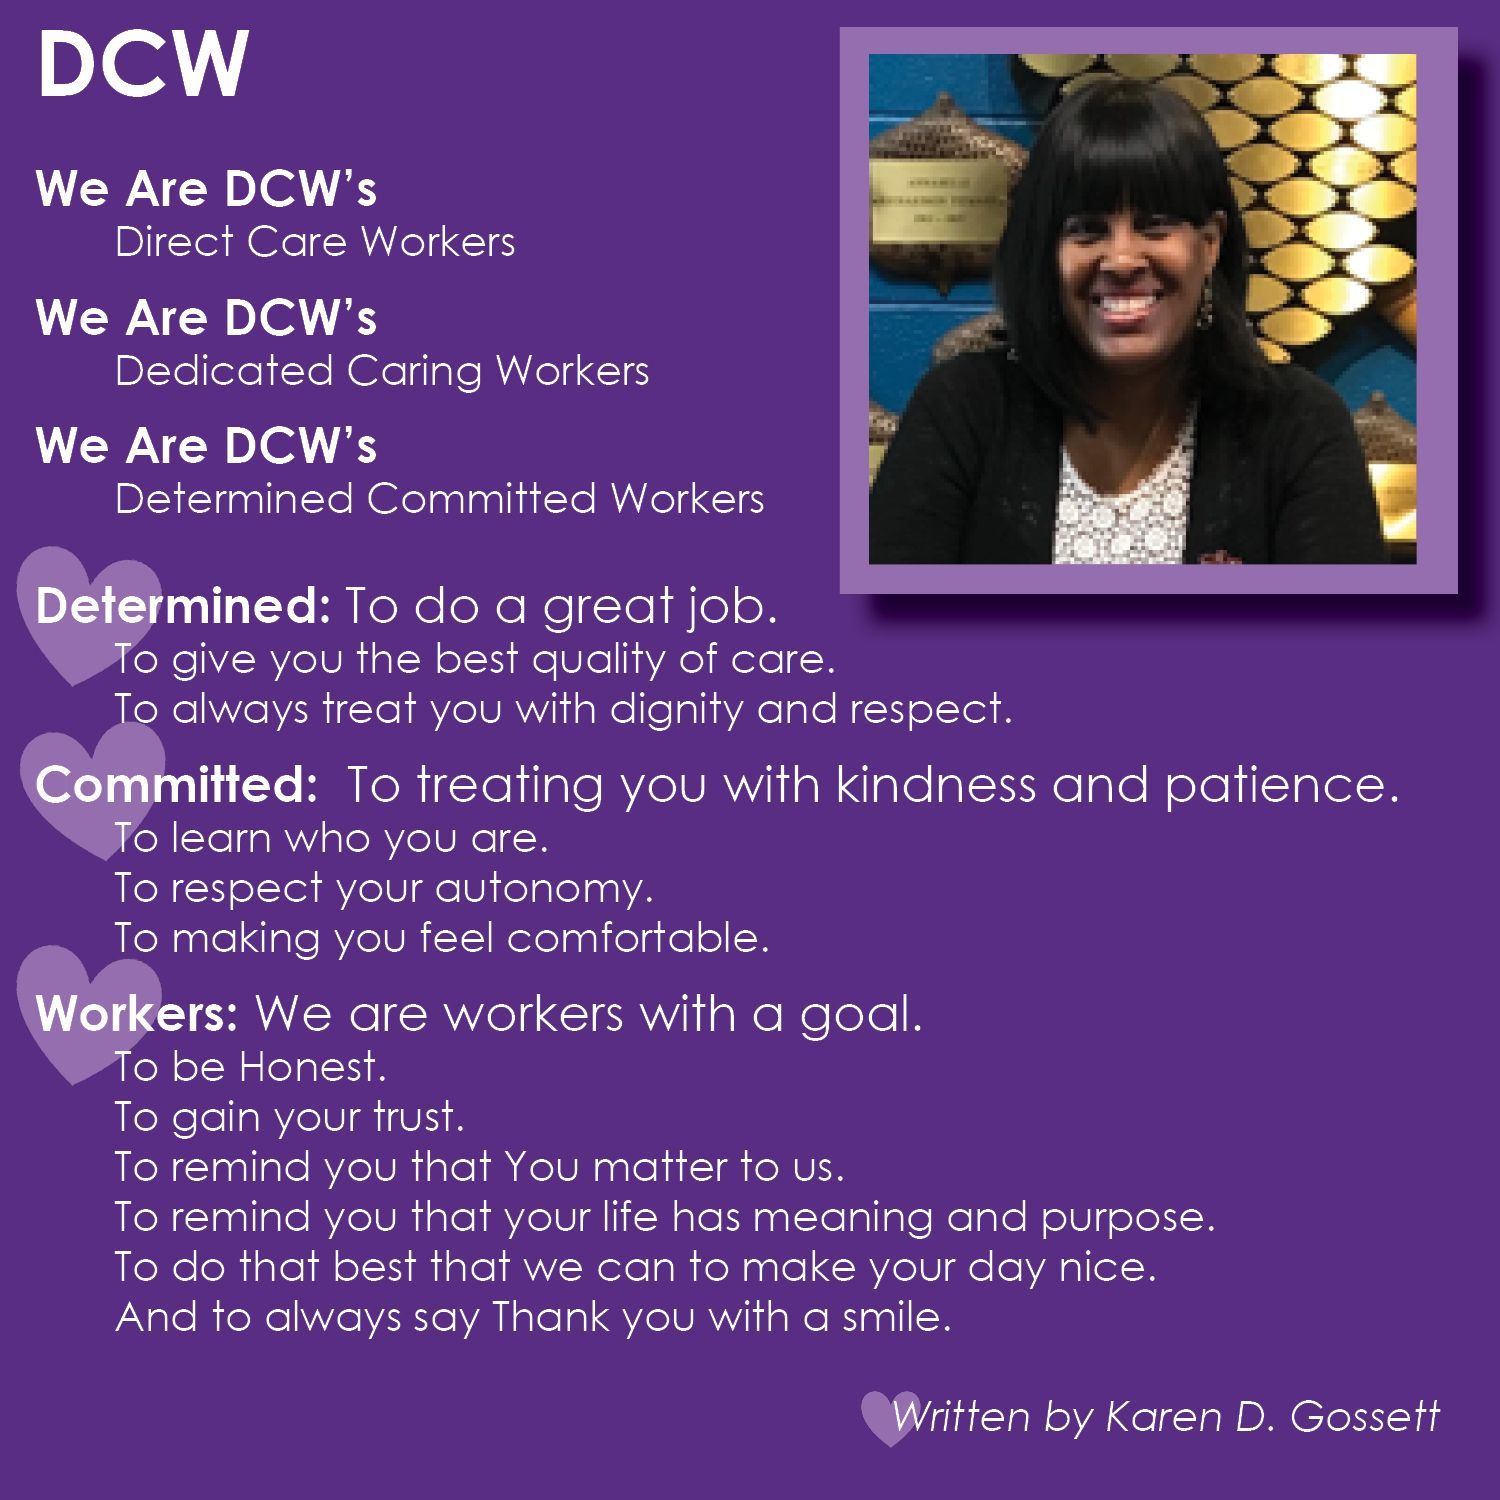 "DCW" by Karen Gossett